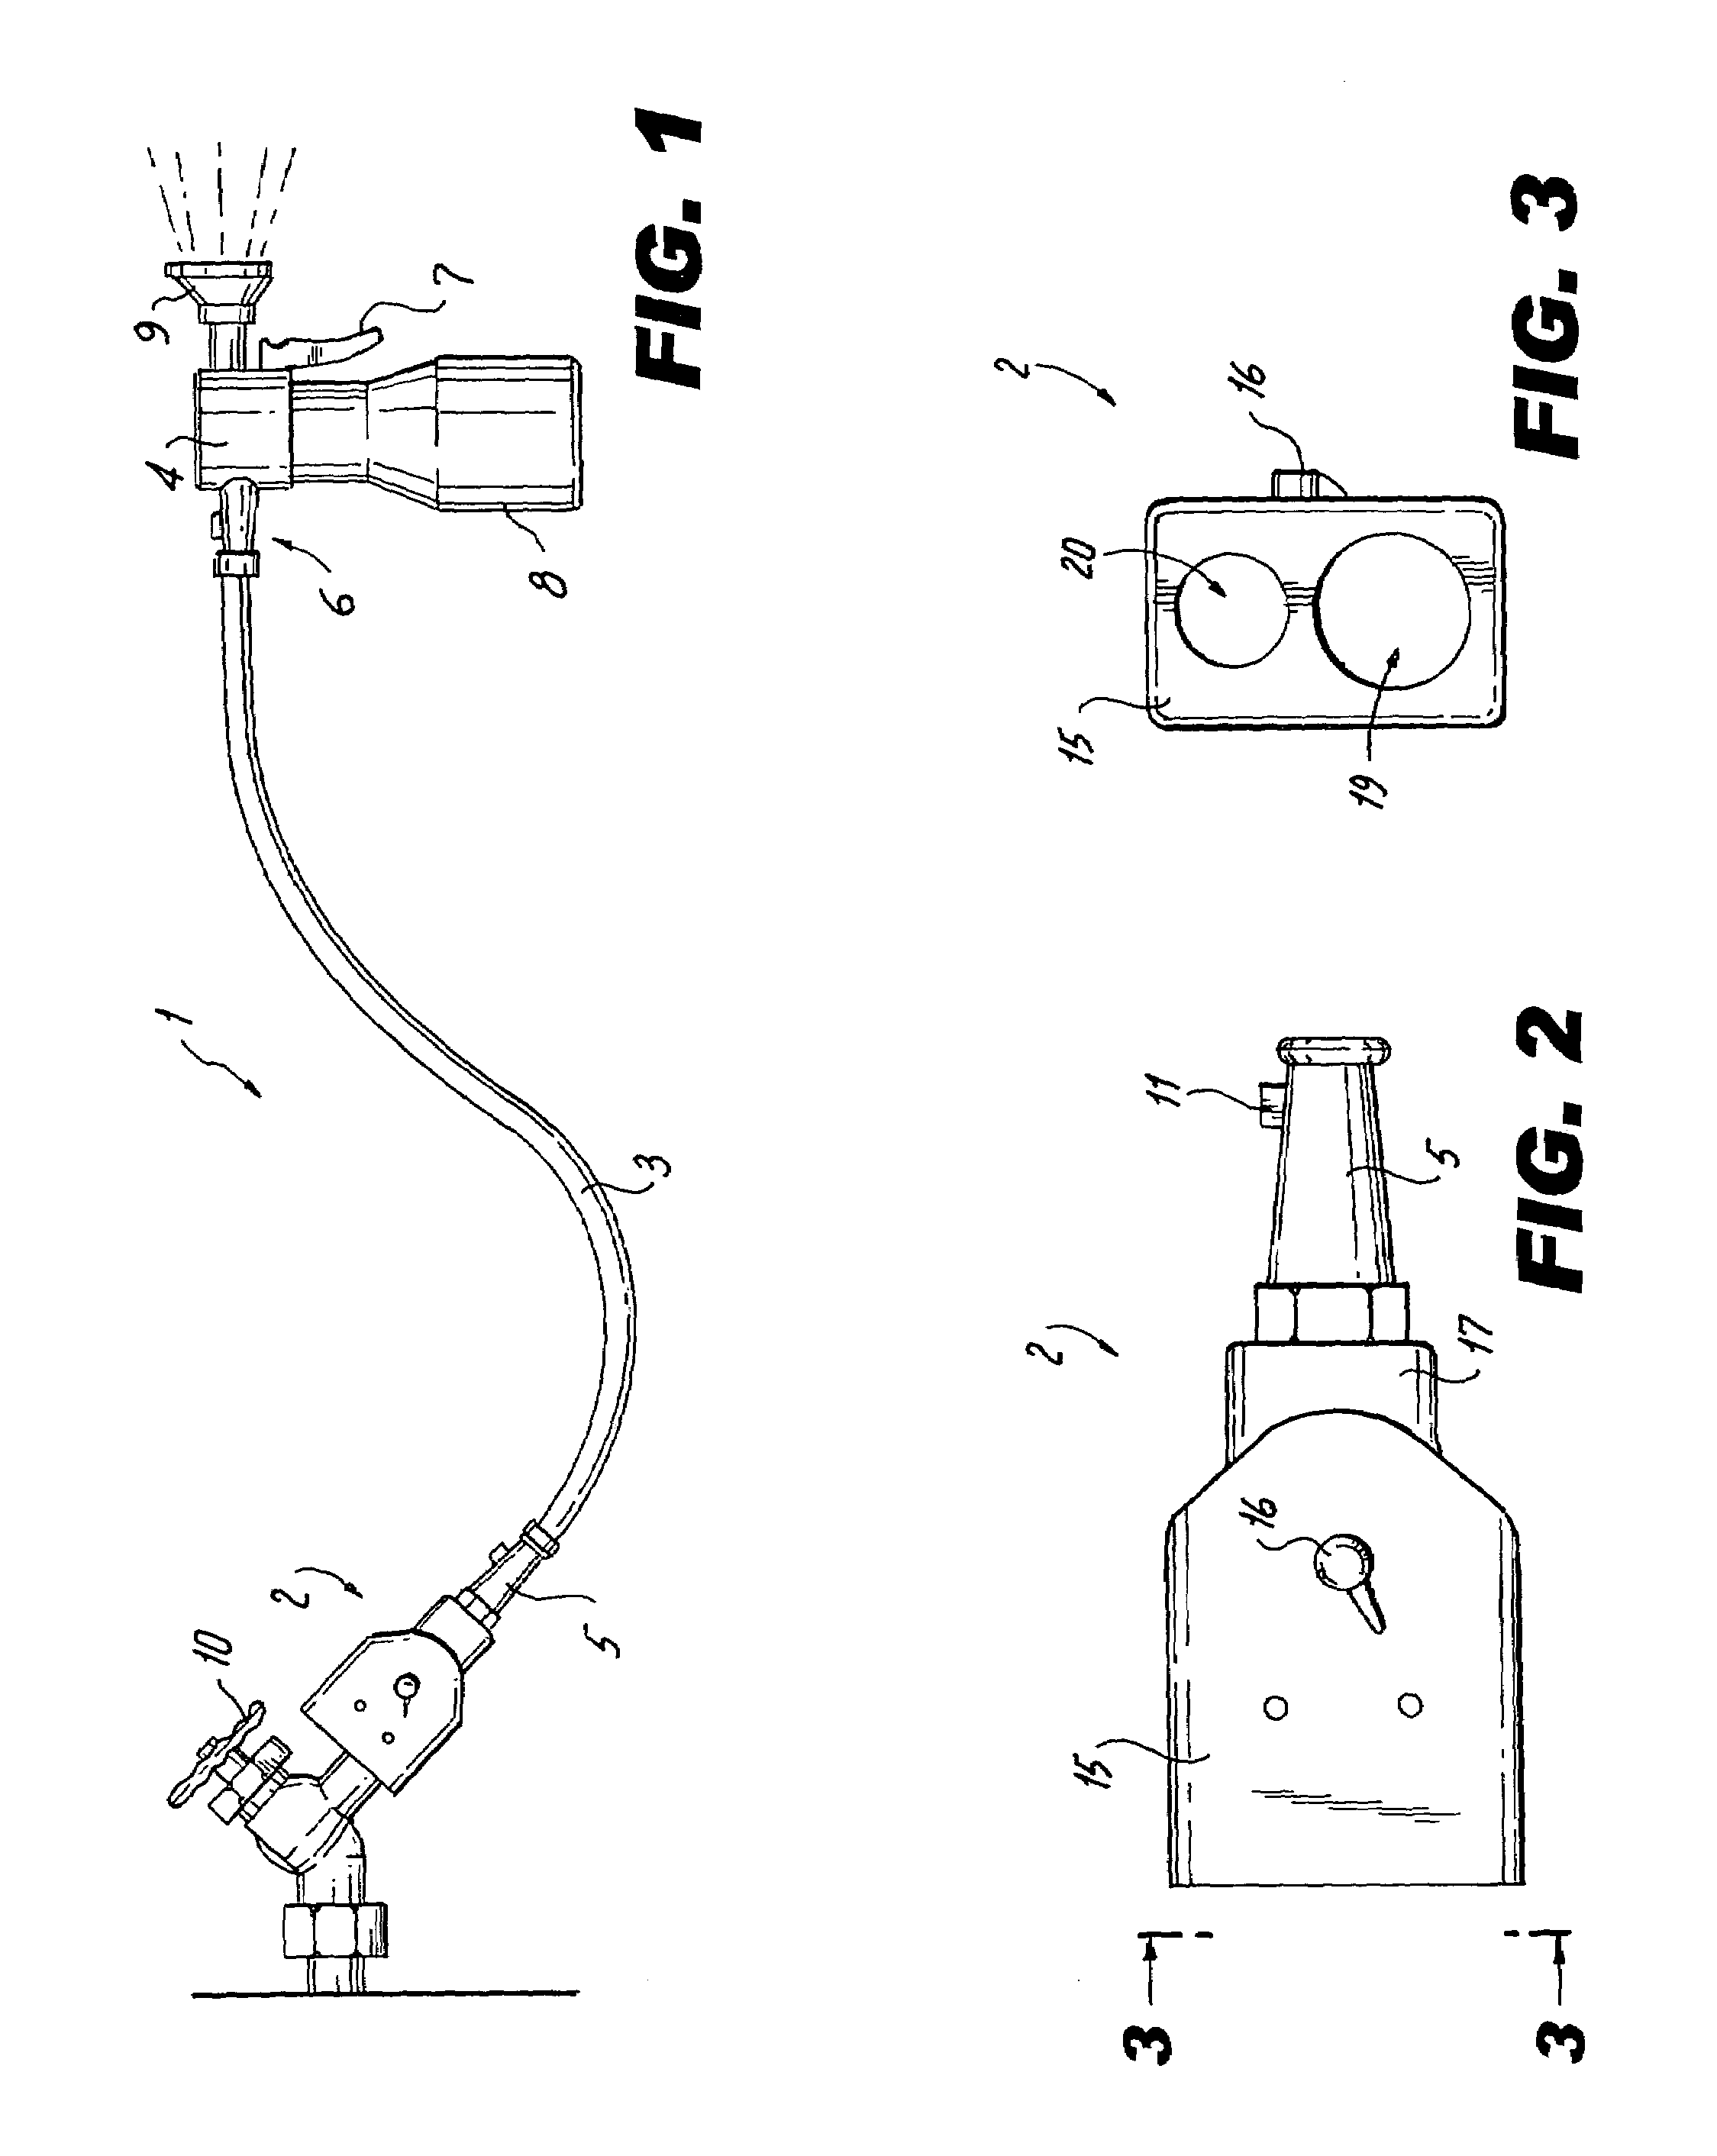 Personal decontamination apparatus and method